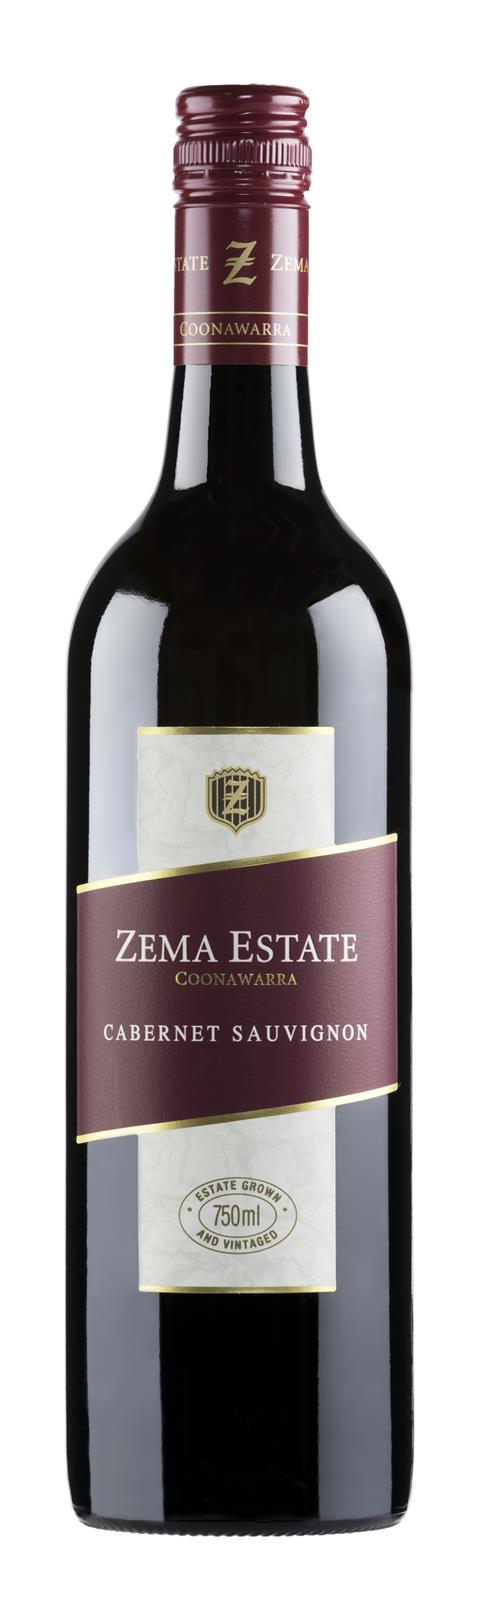 Zema Estate Cabernet Sauvignon 2015 (Australia)